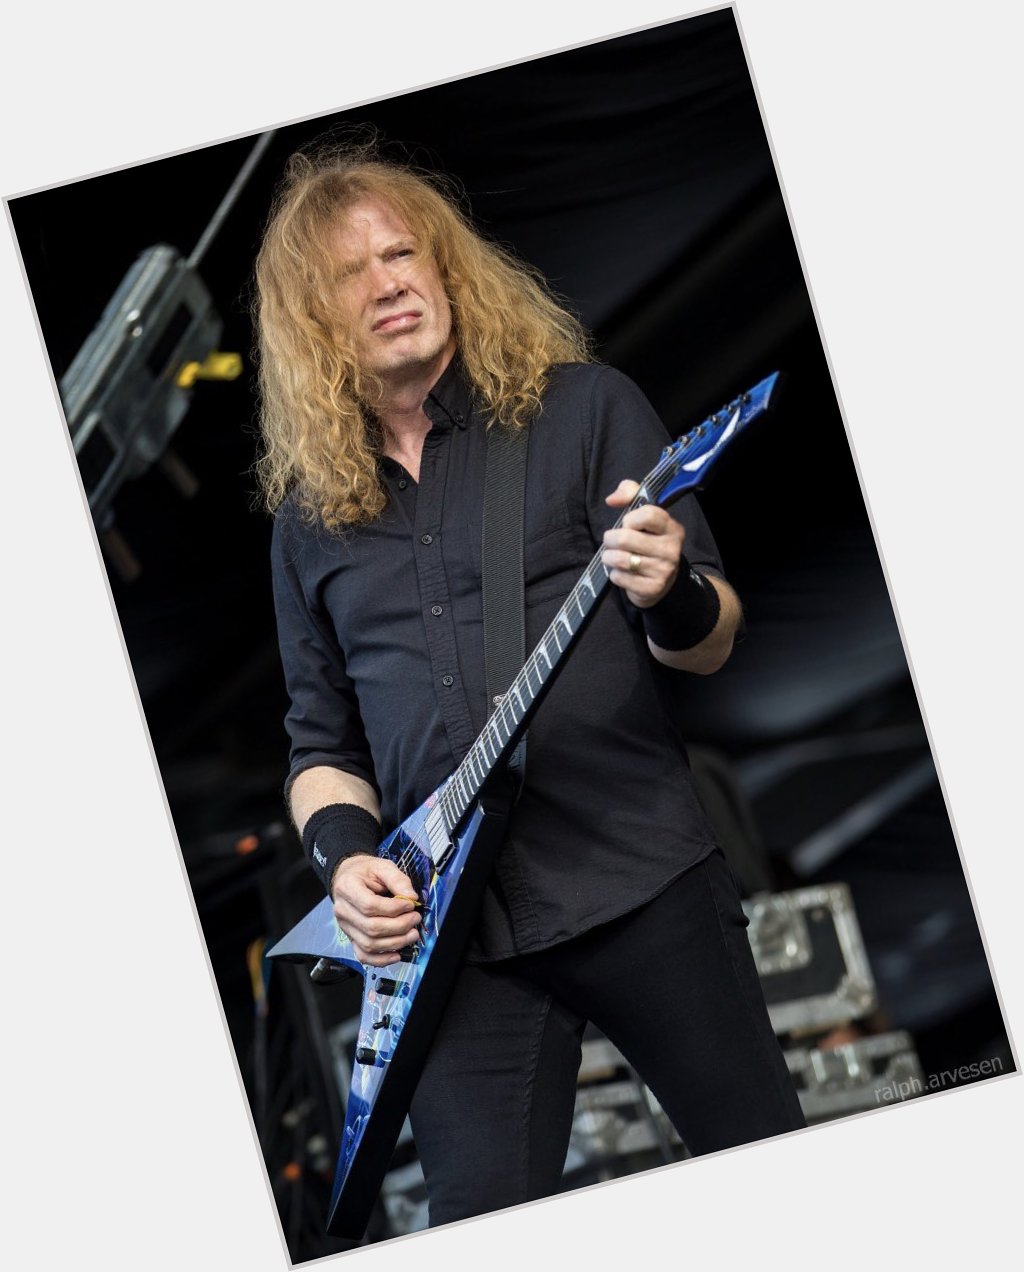 Happy birthday, Dave Mustaine! 